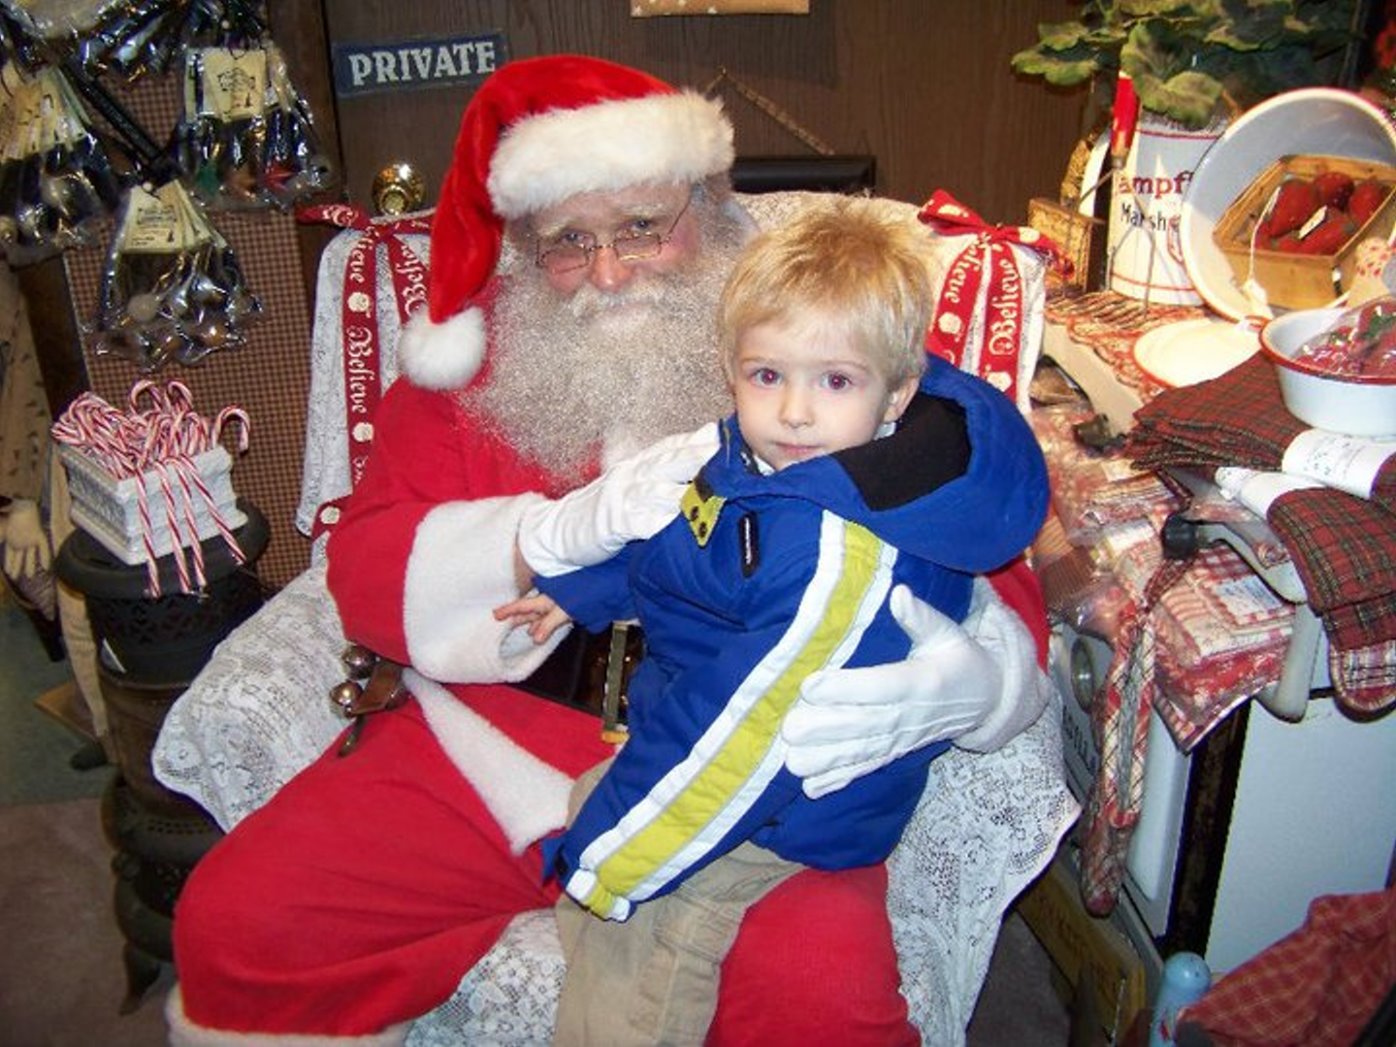 Braxton with Santa